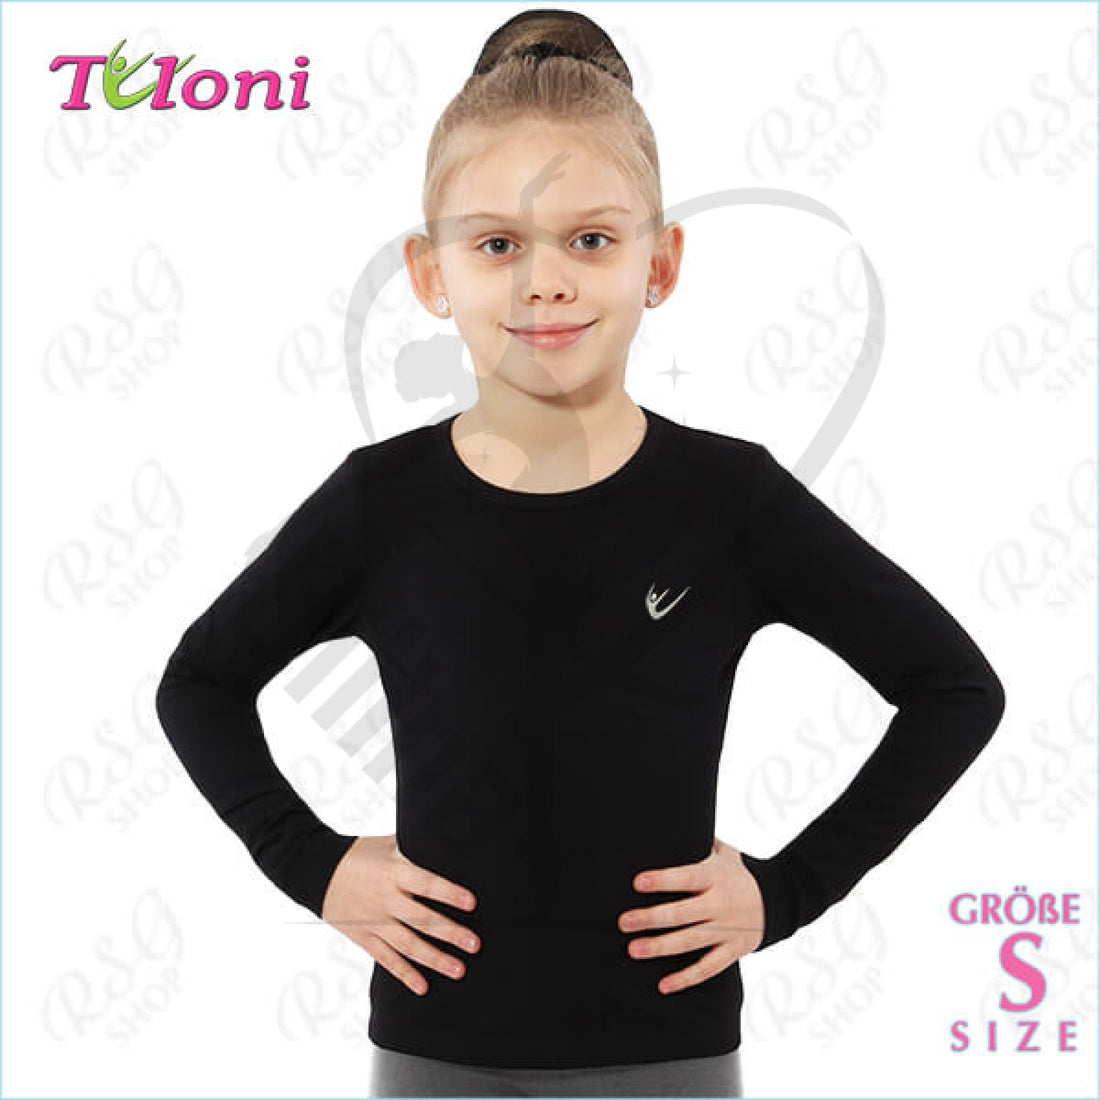 Tuloni Long Sleeve Top S (146-152) T Shirts & Tops